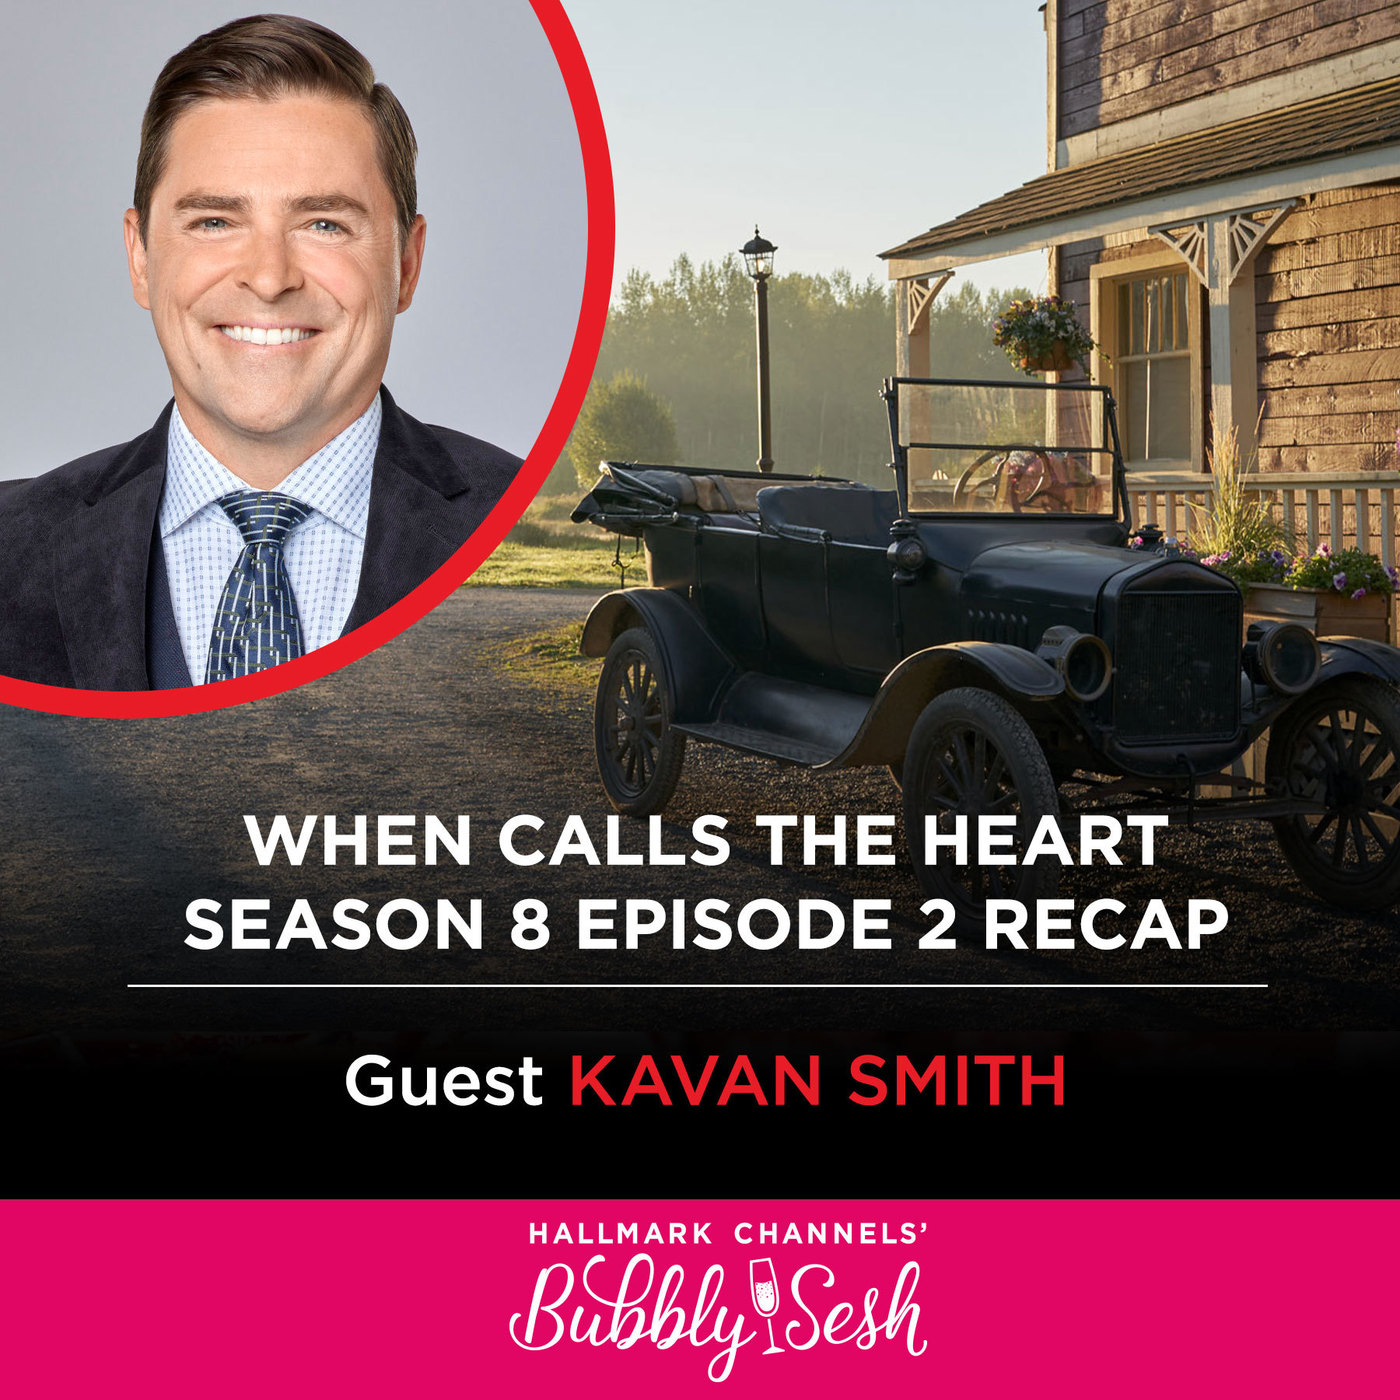 When Calls the Heart S8 Ep 2 Recap with Guest Kavan Smith